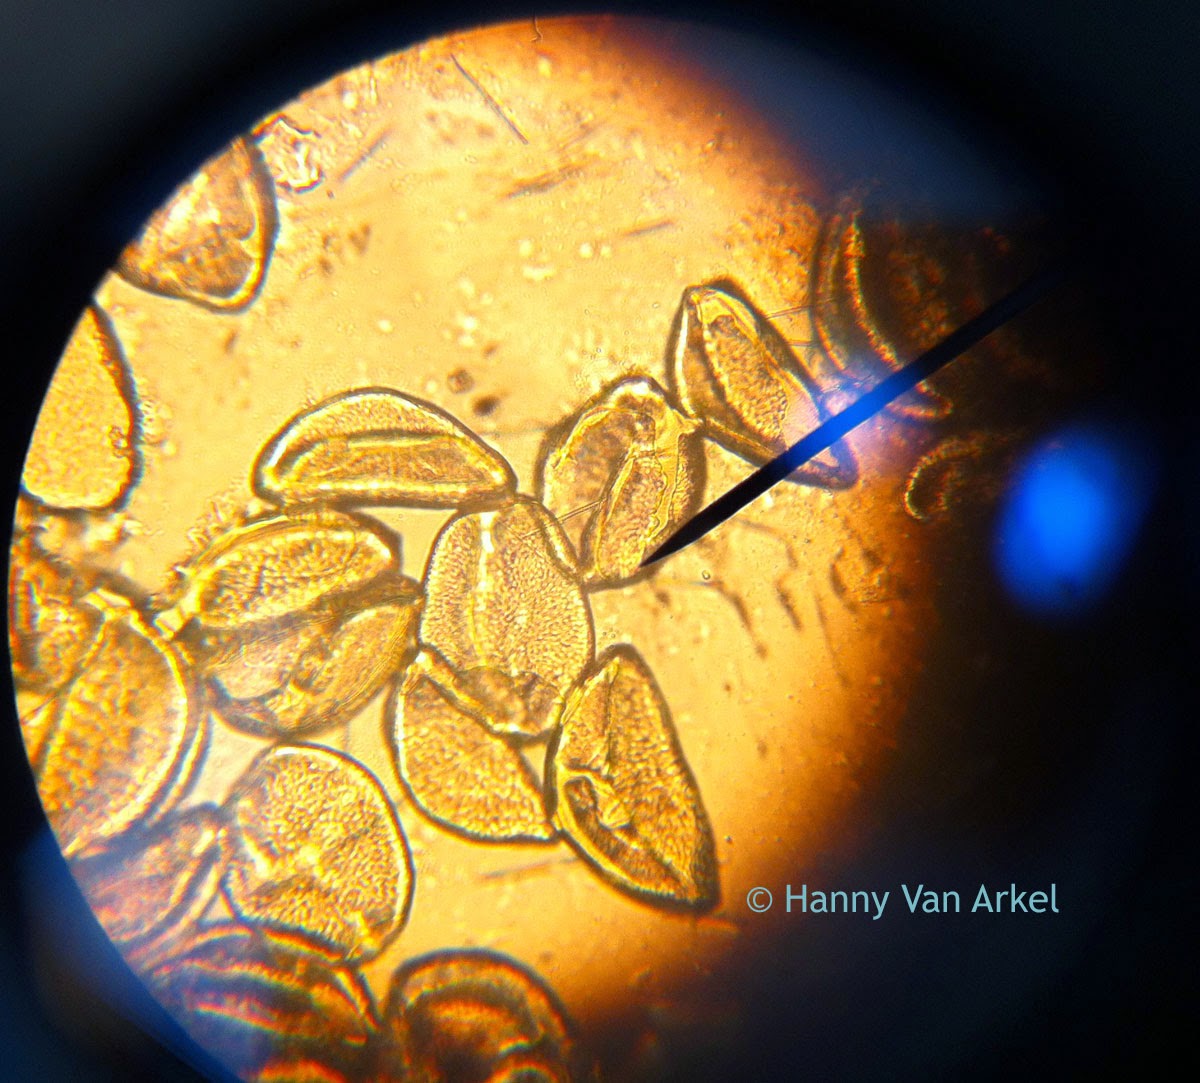 Pollen microscopy image at 400x